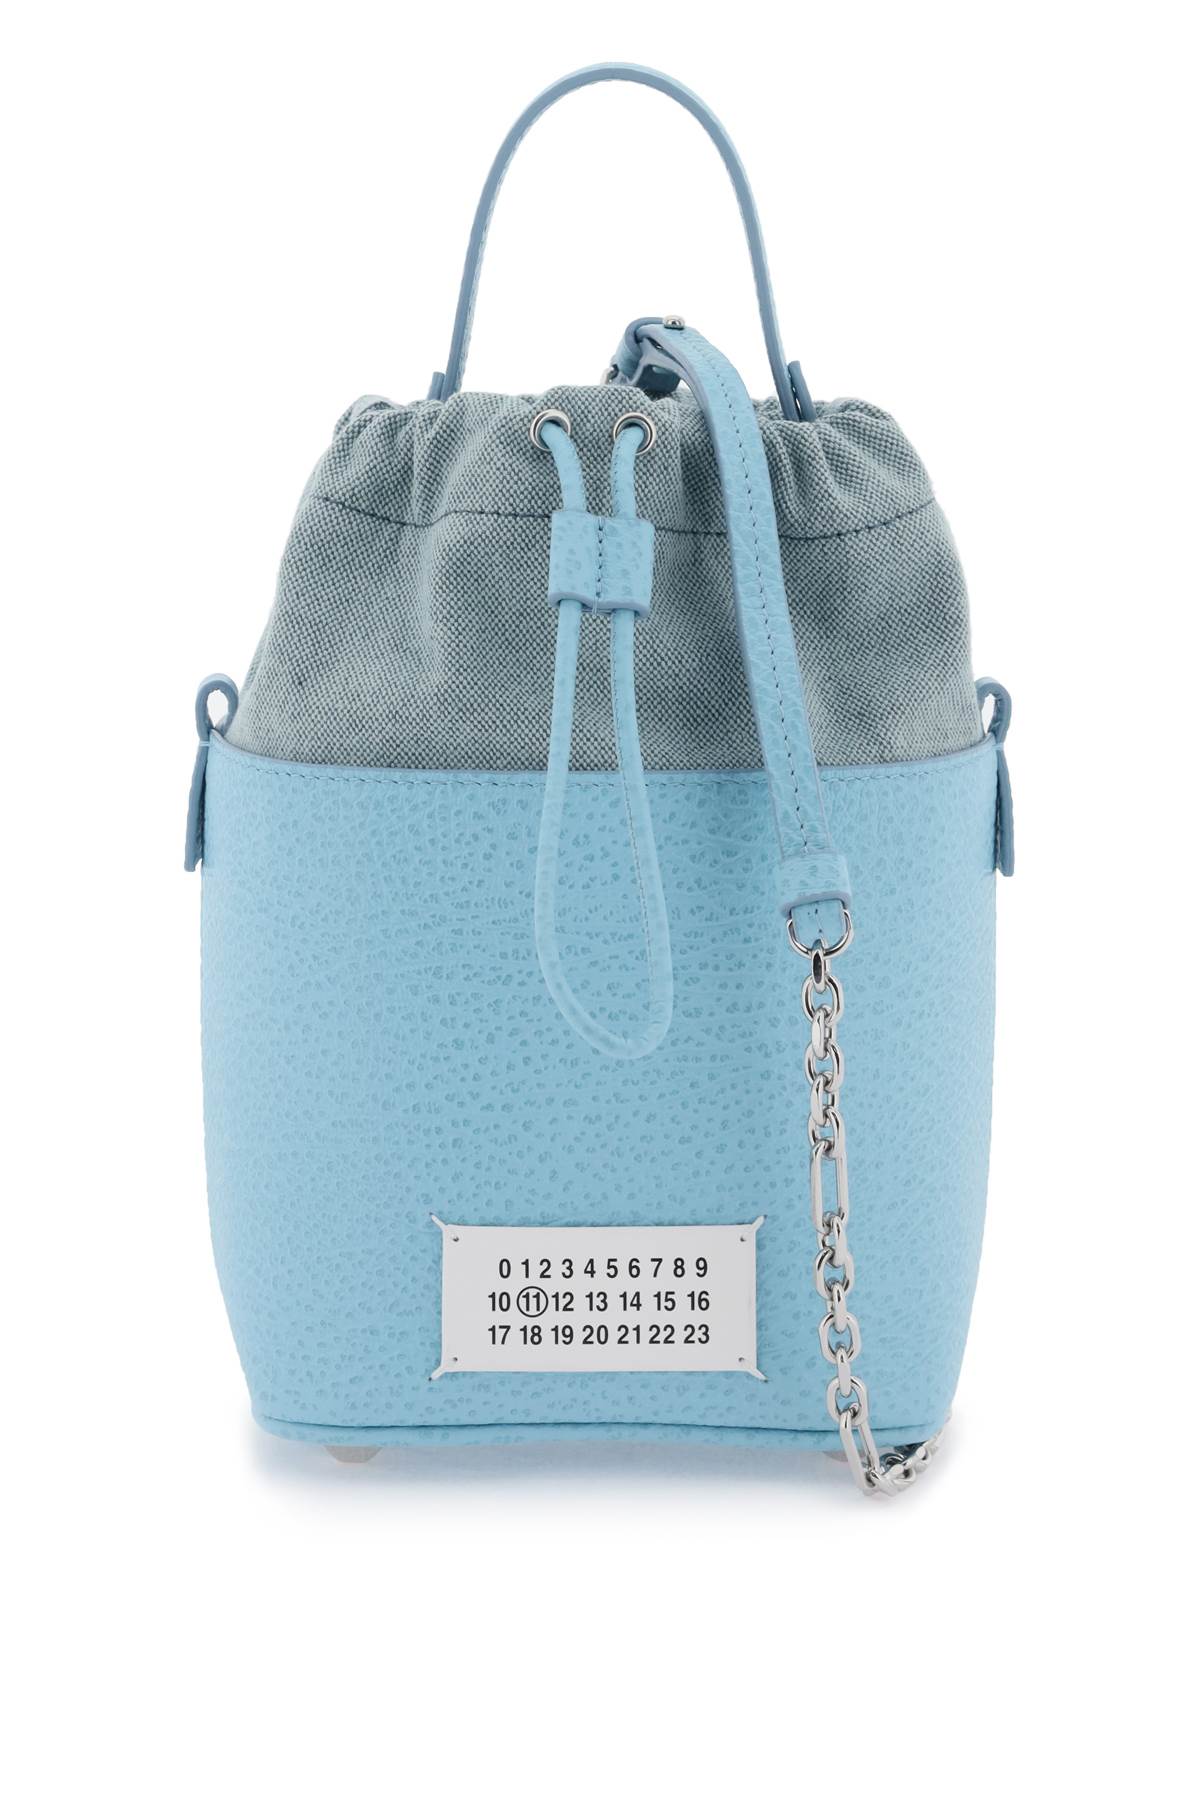 MAISON MARGIELA Mini Bucket Designer Handbag in Hammered Leather with Detachable Strap and White Logo Label - Black